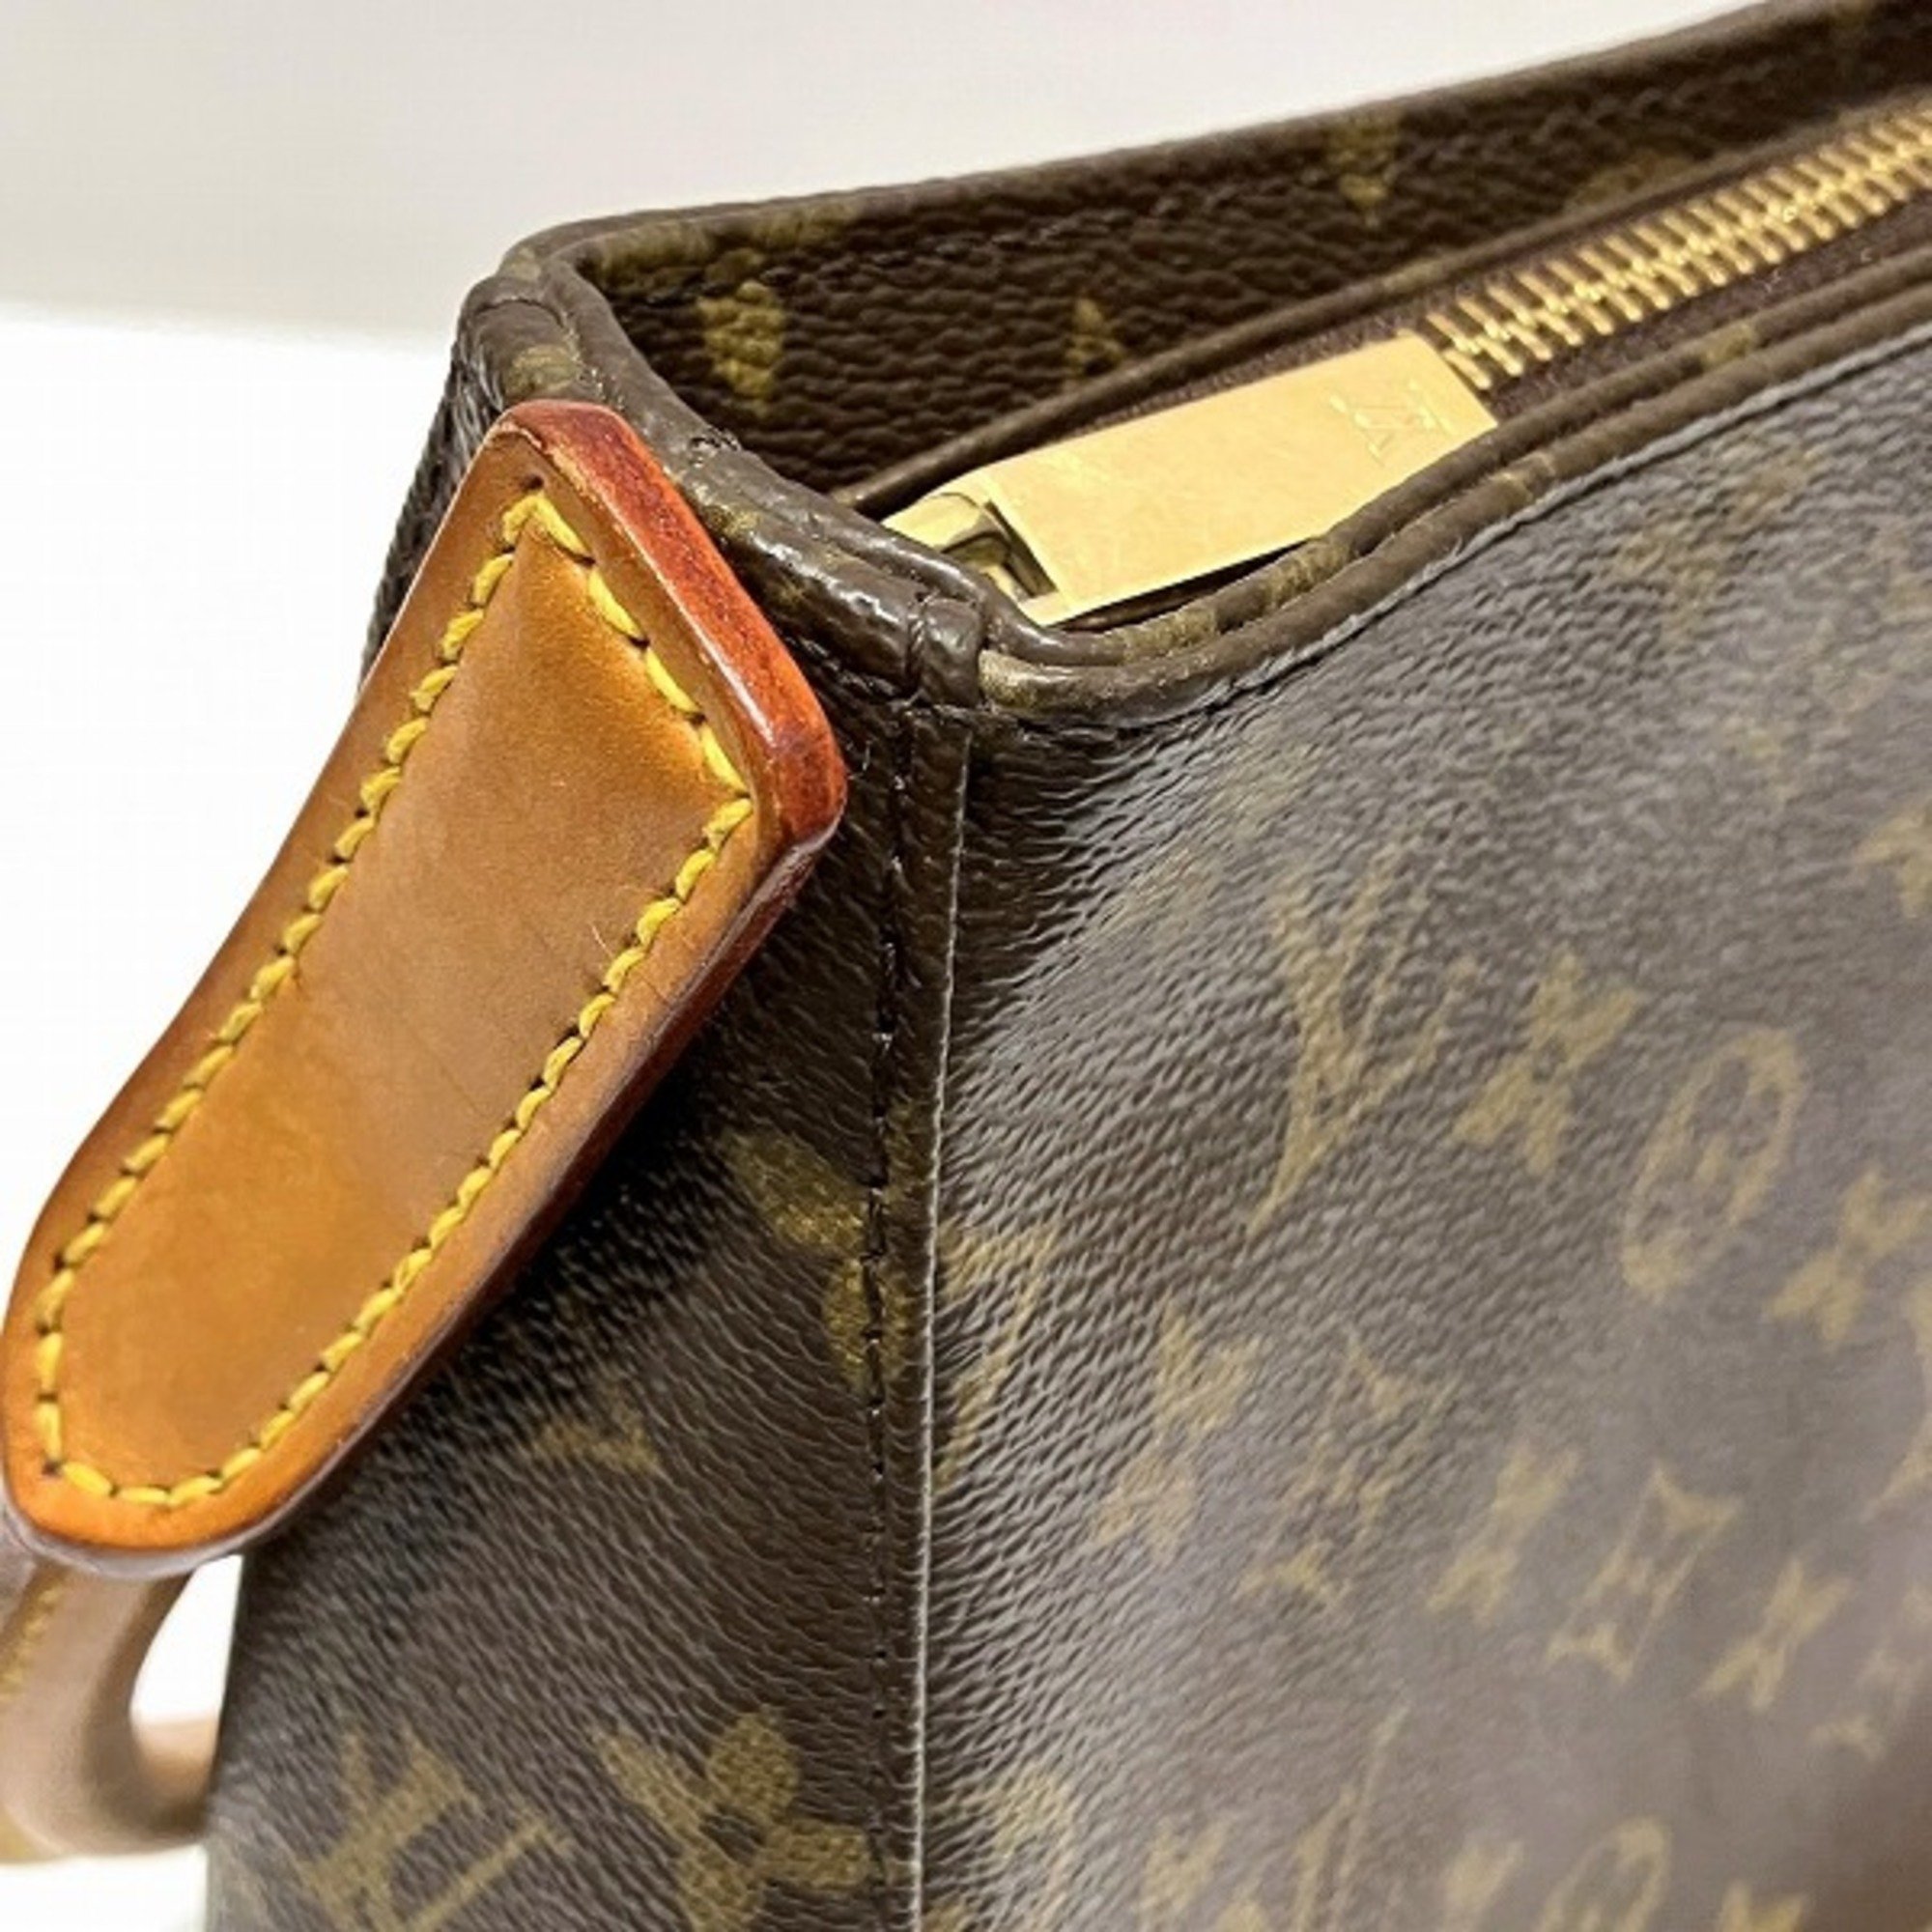 Louis Vuitton Monogram Looping MM M51146 Bag Shoulder Women's